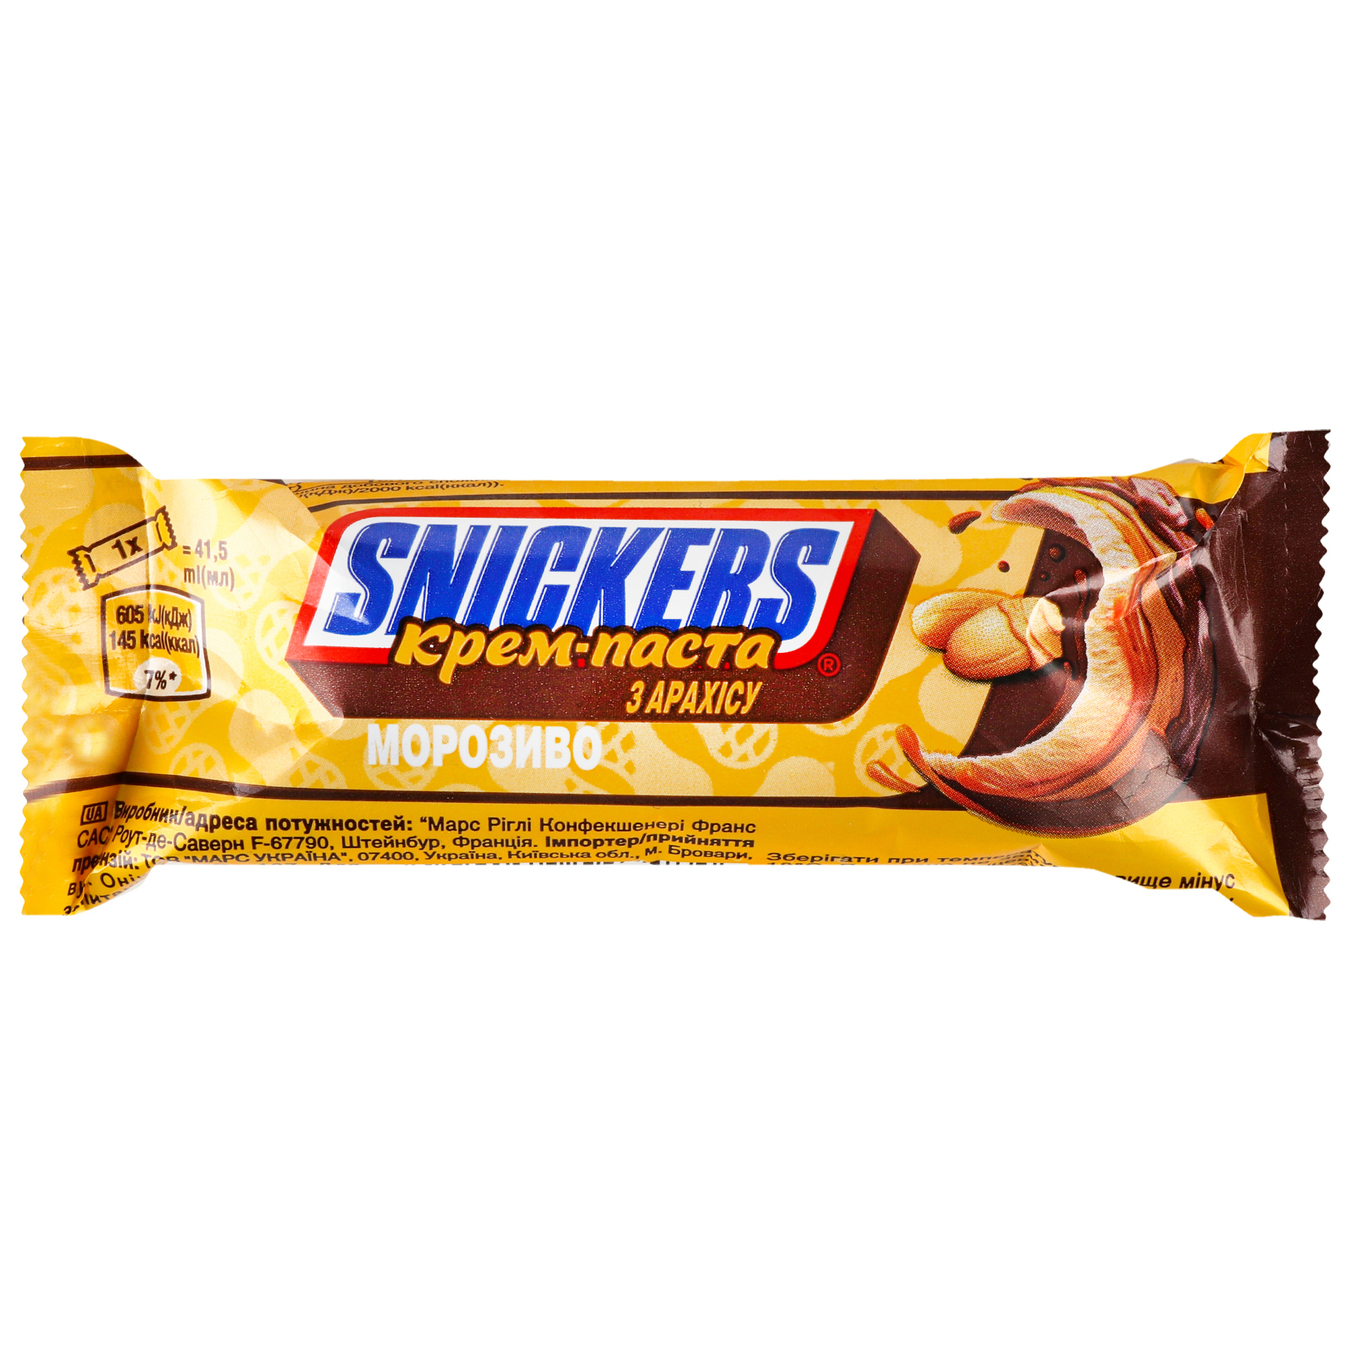 Snickers Creamy peanut butter ice cream 39g